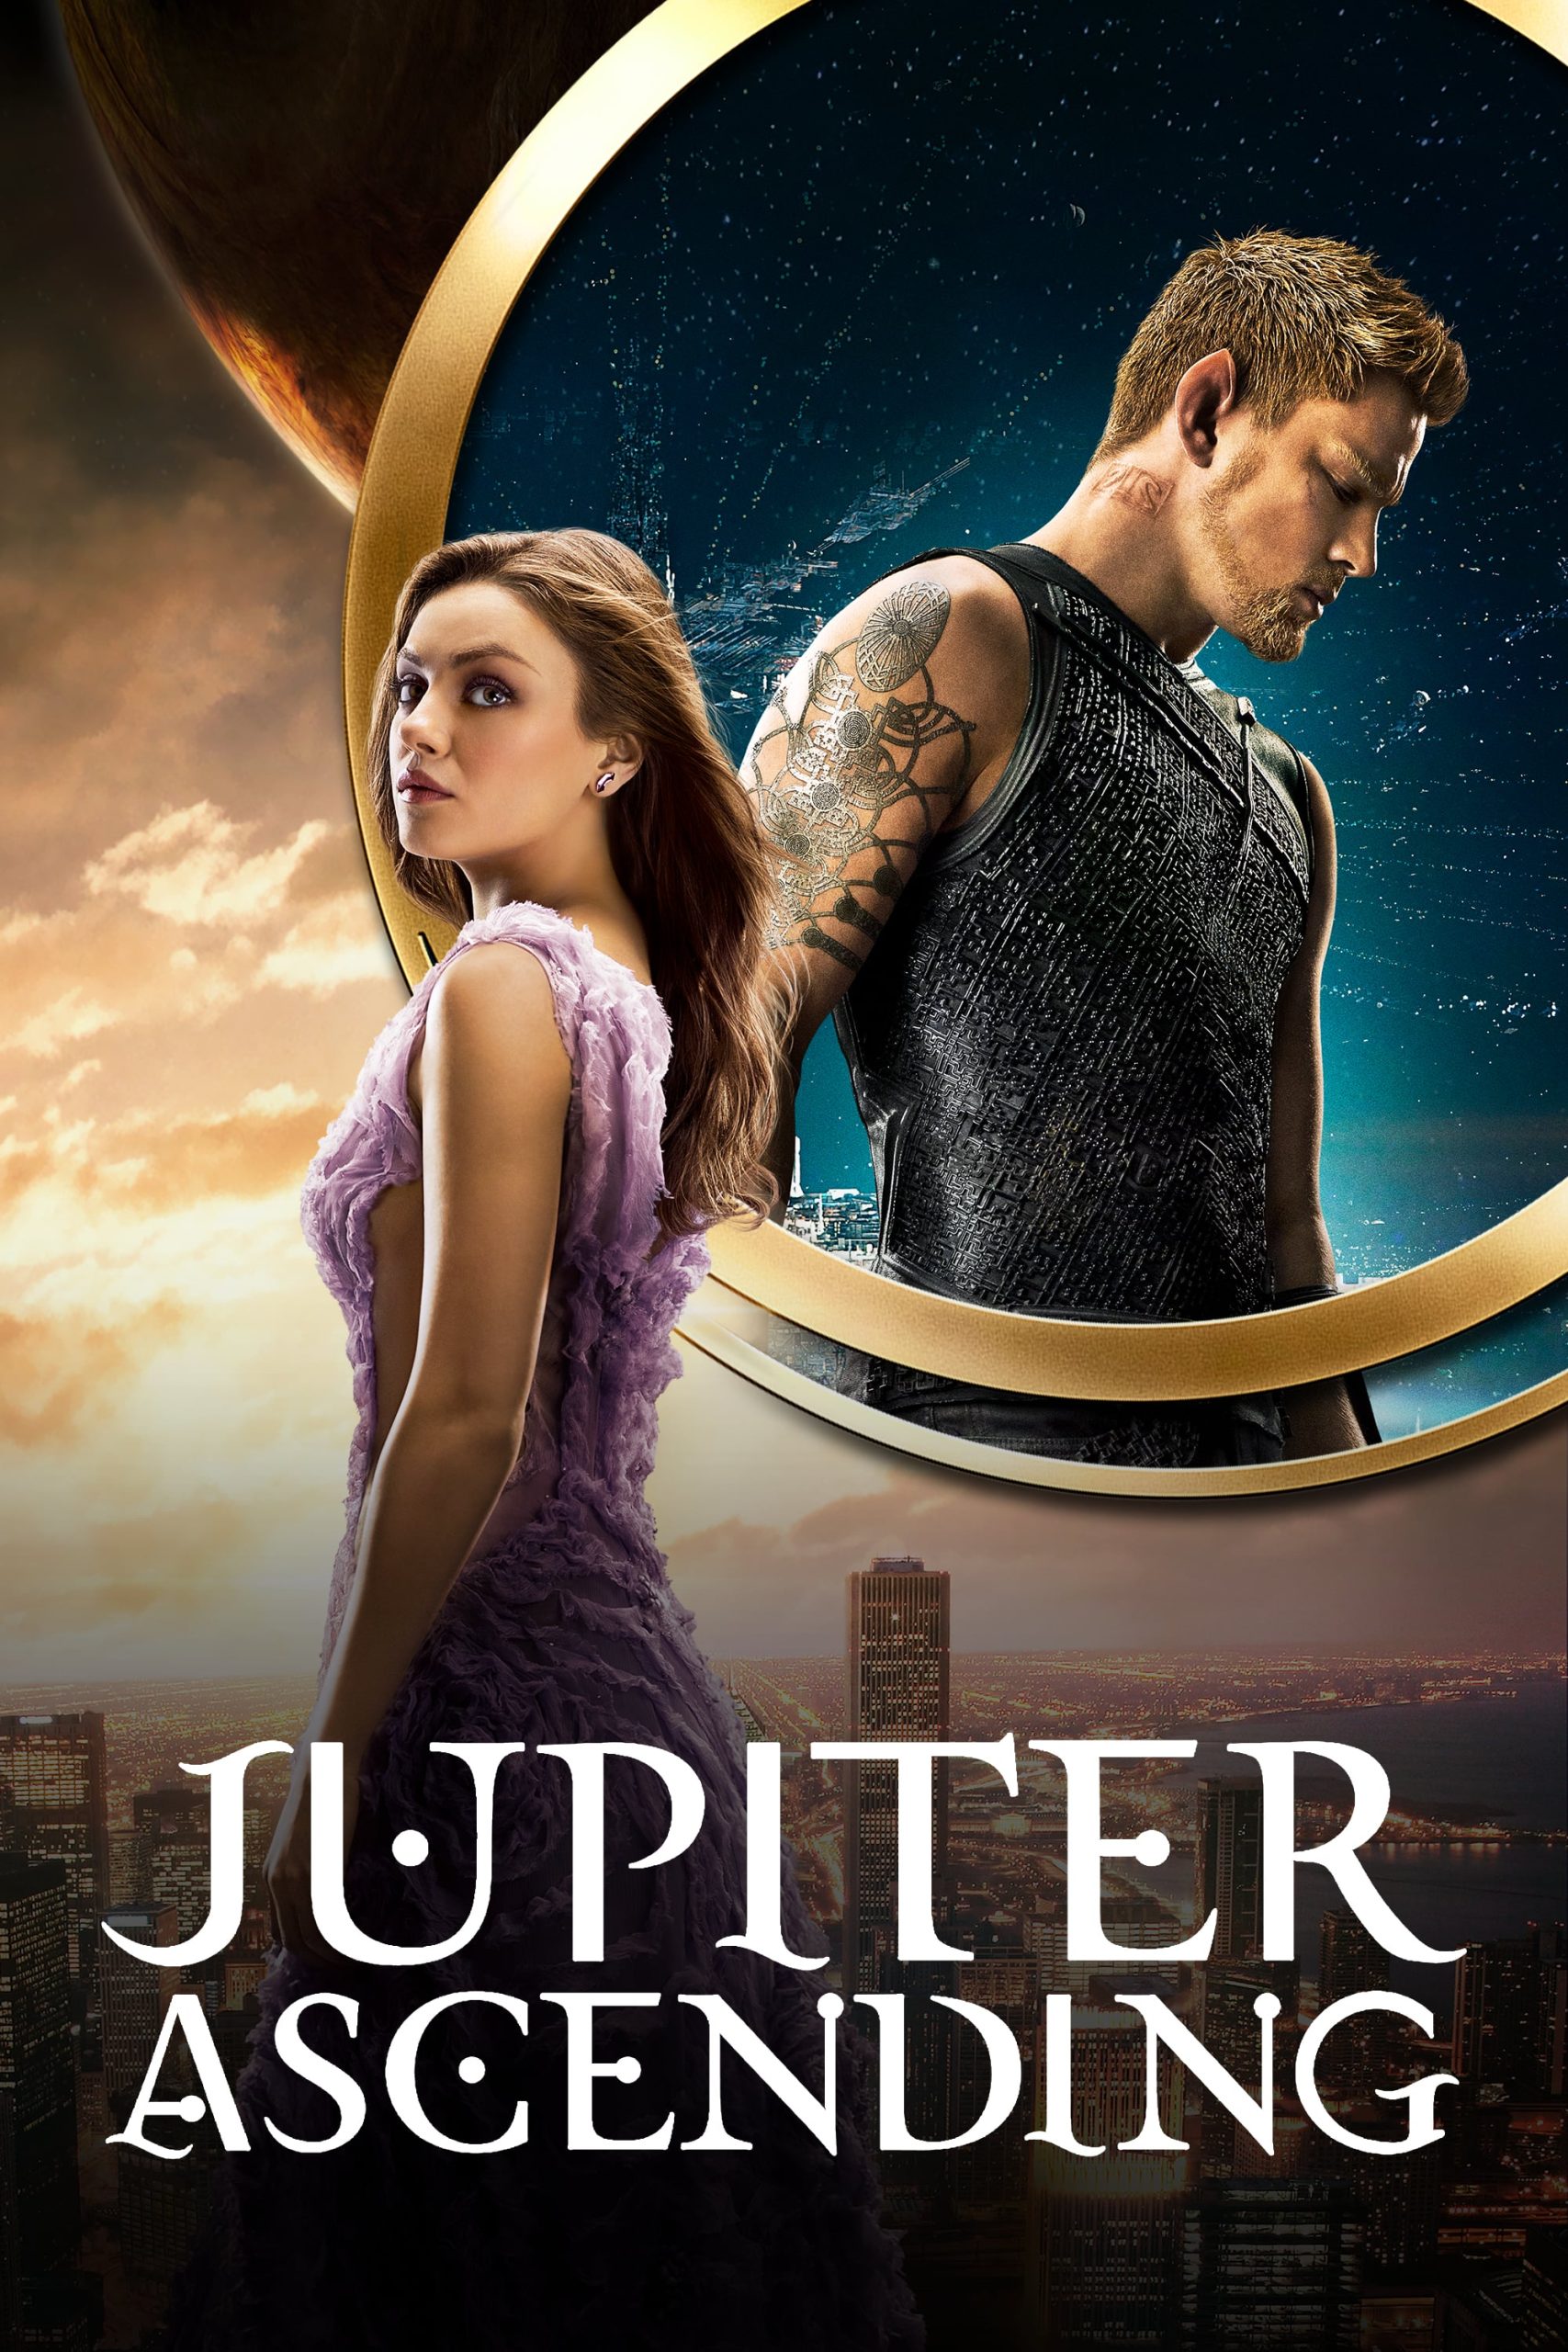 El destino de Júpiter